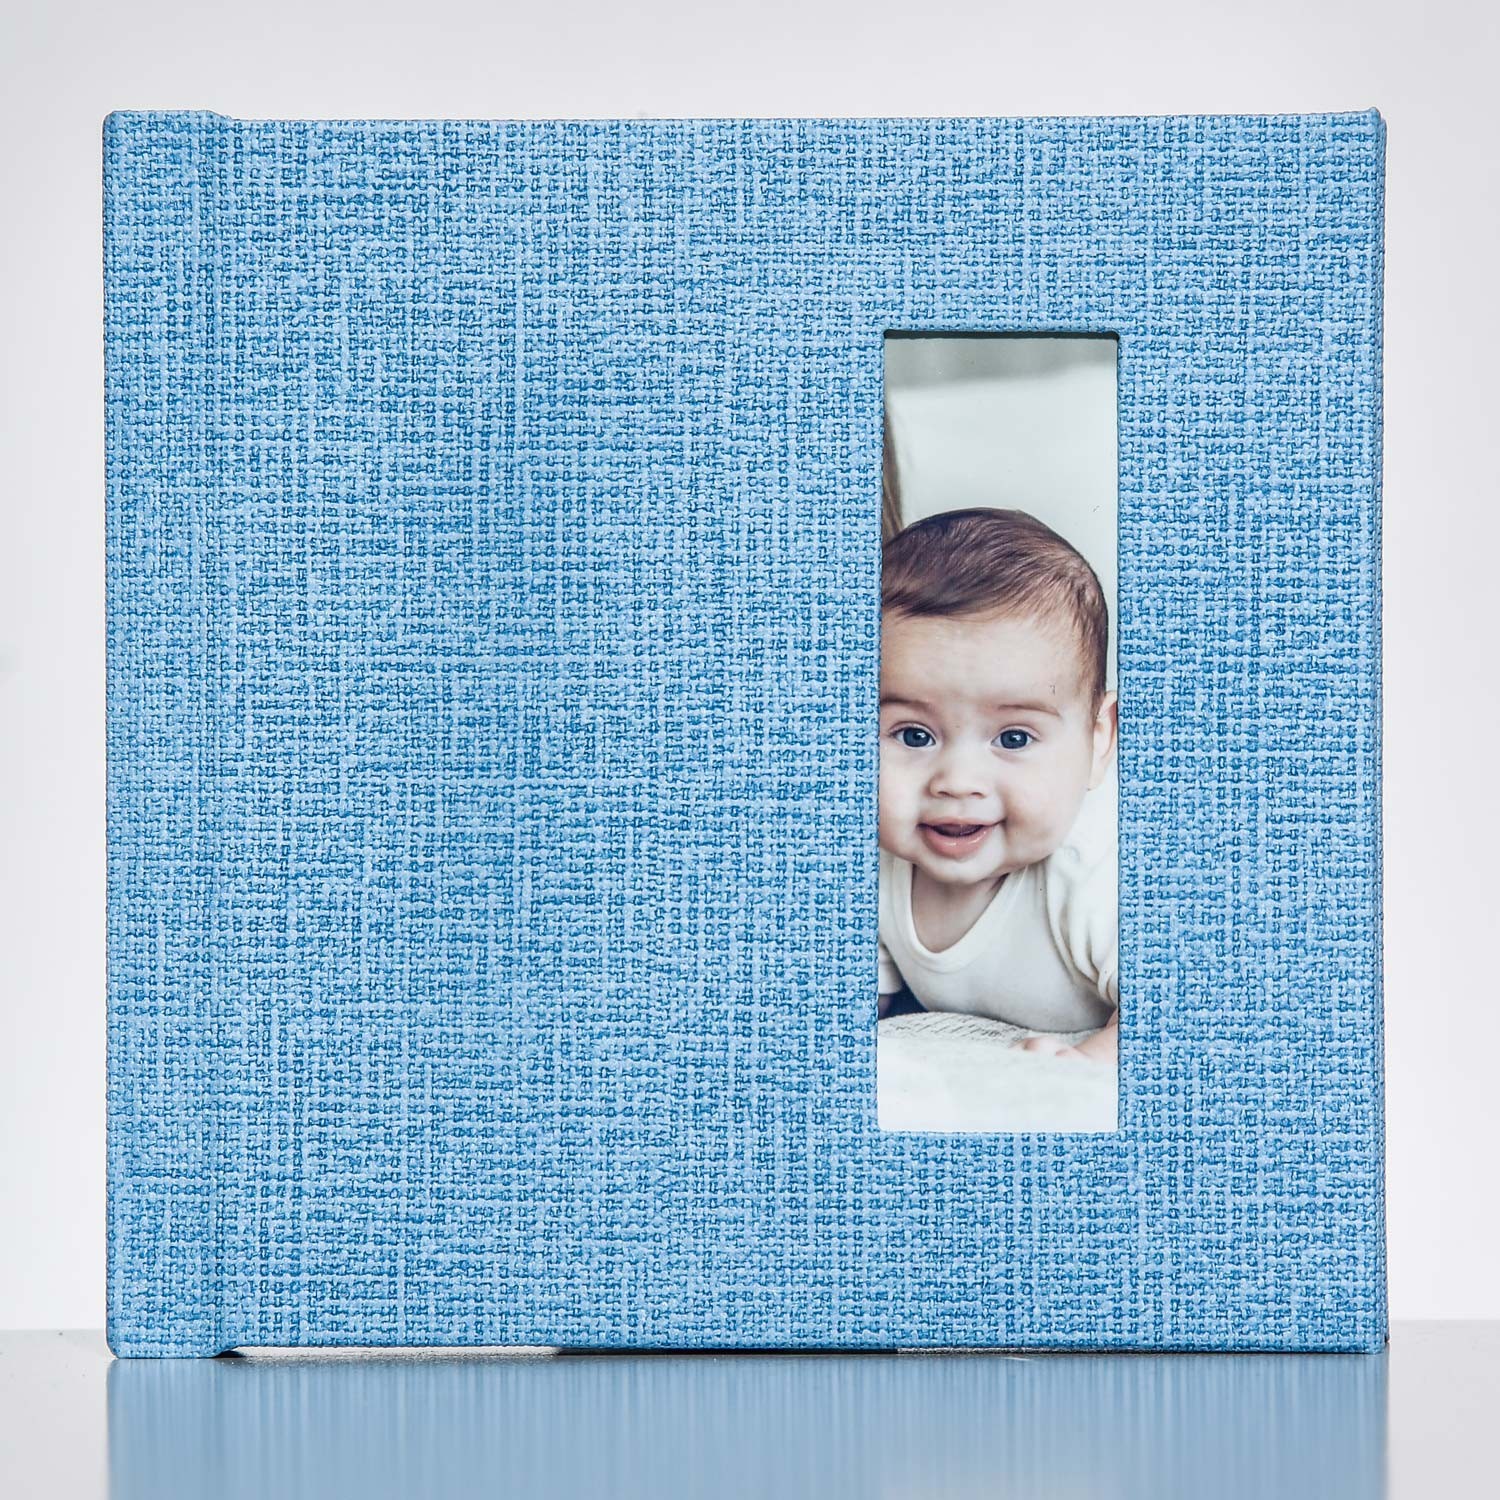 Silverbook 15x15cm with Portrait Window